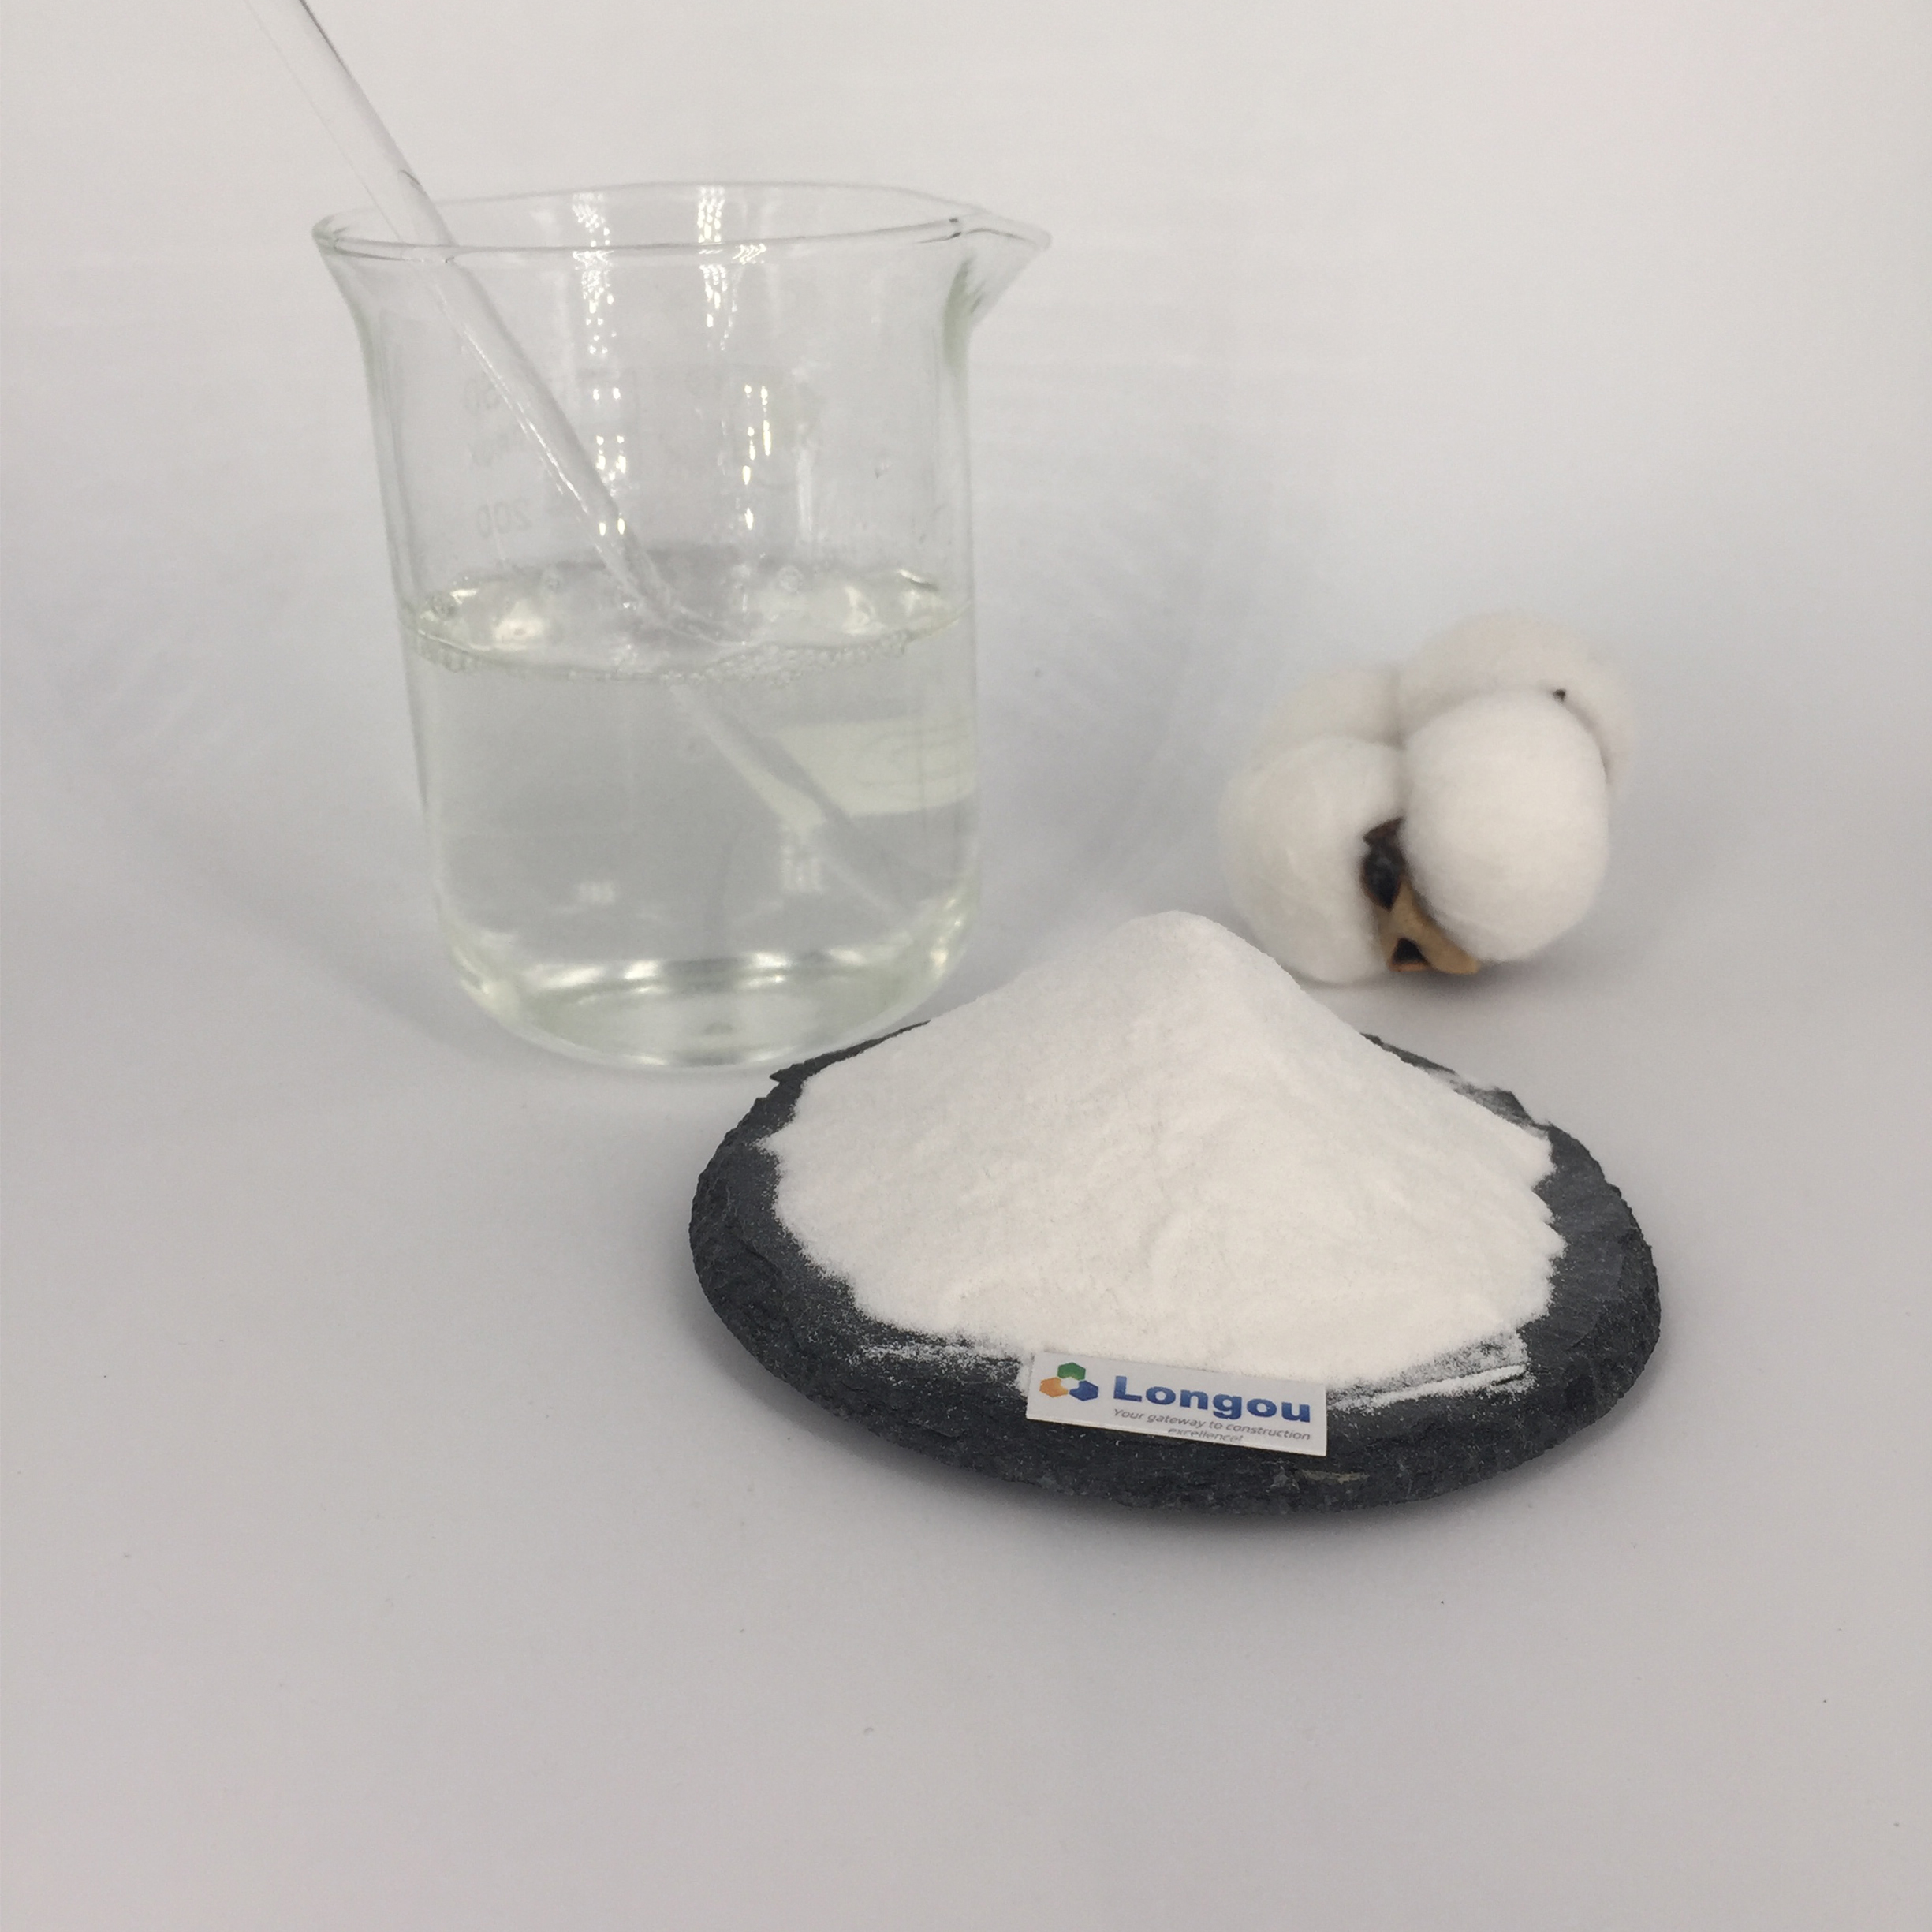 Mai riƙe ruwa Hydroxypropyl Methyl Cellulose/Hypromellose/HPMC don Gina 3